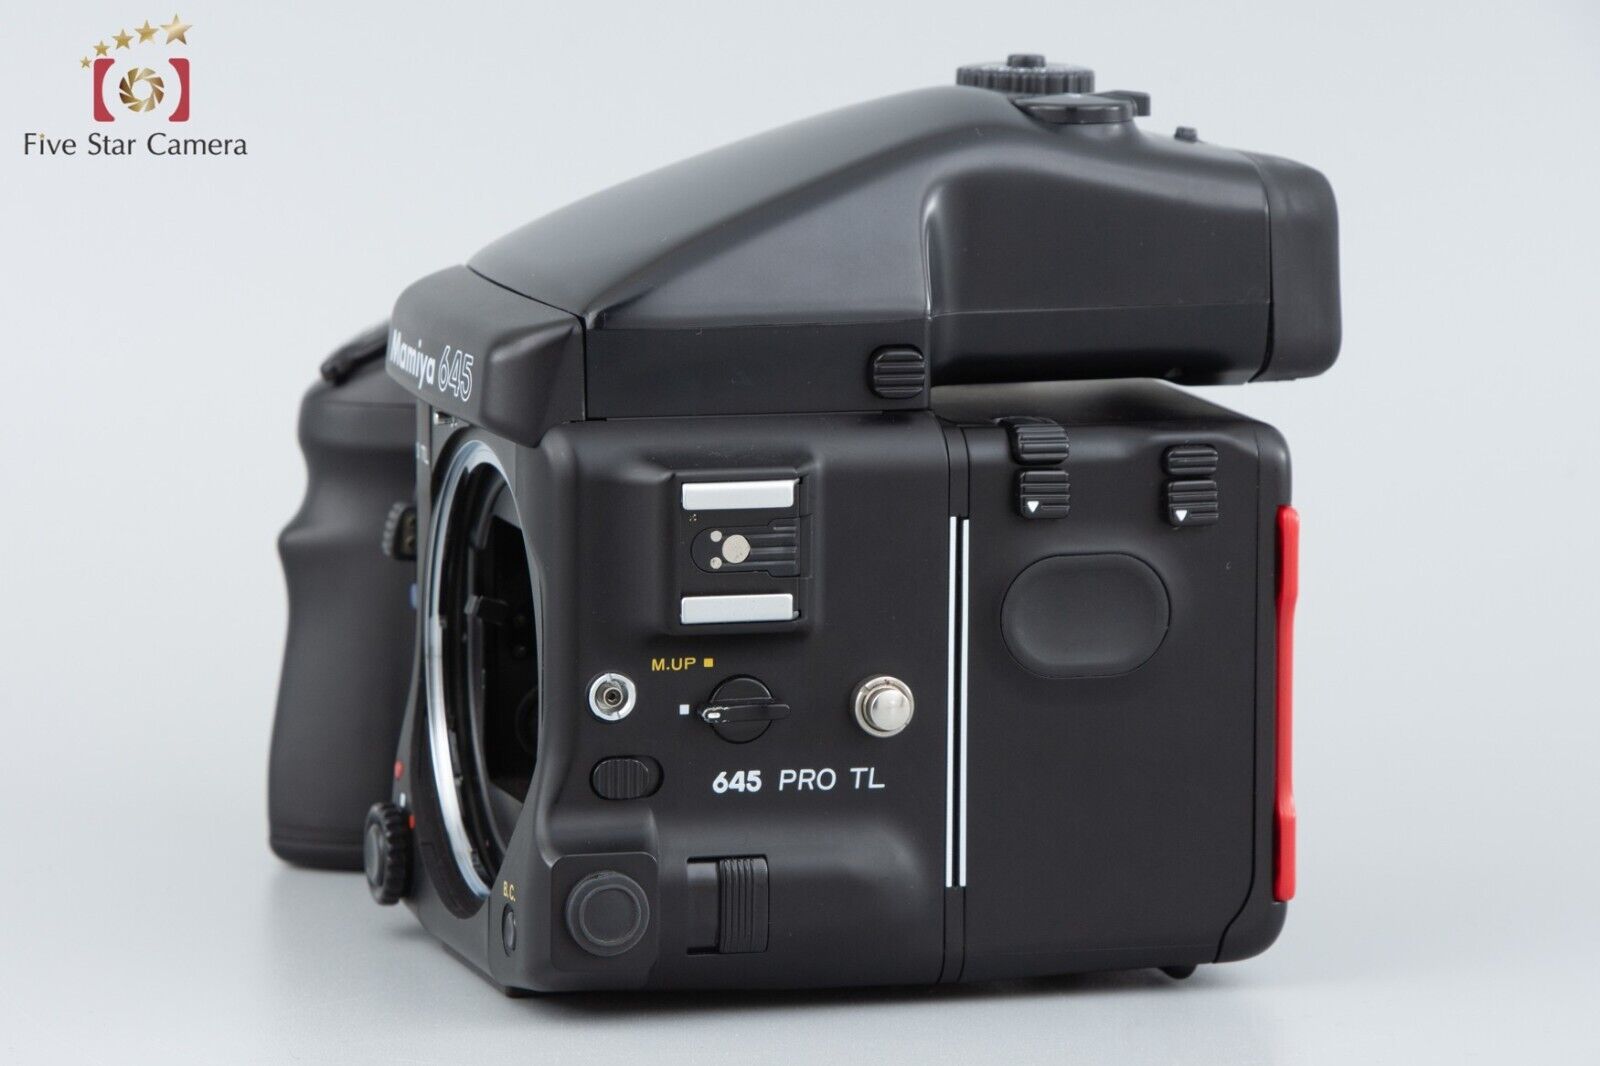 Mamiya 645 PRO TL Medium Format Film Camera Body